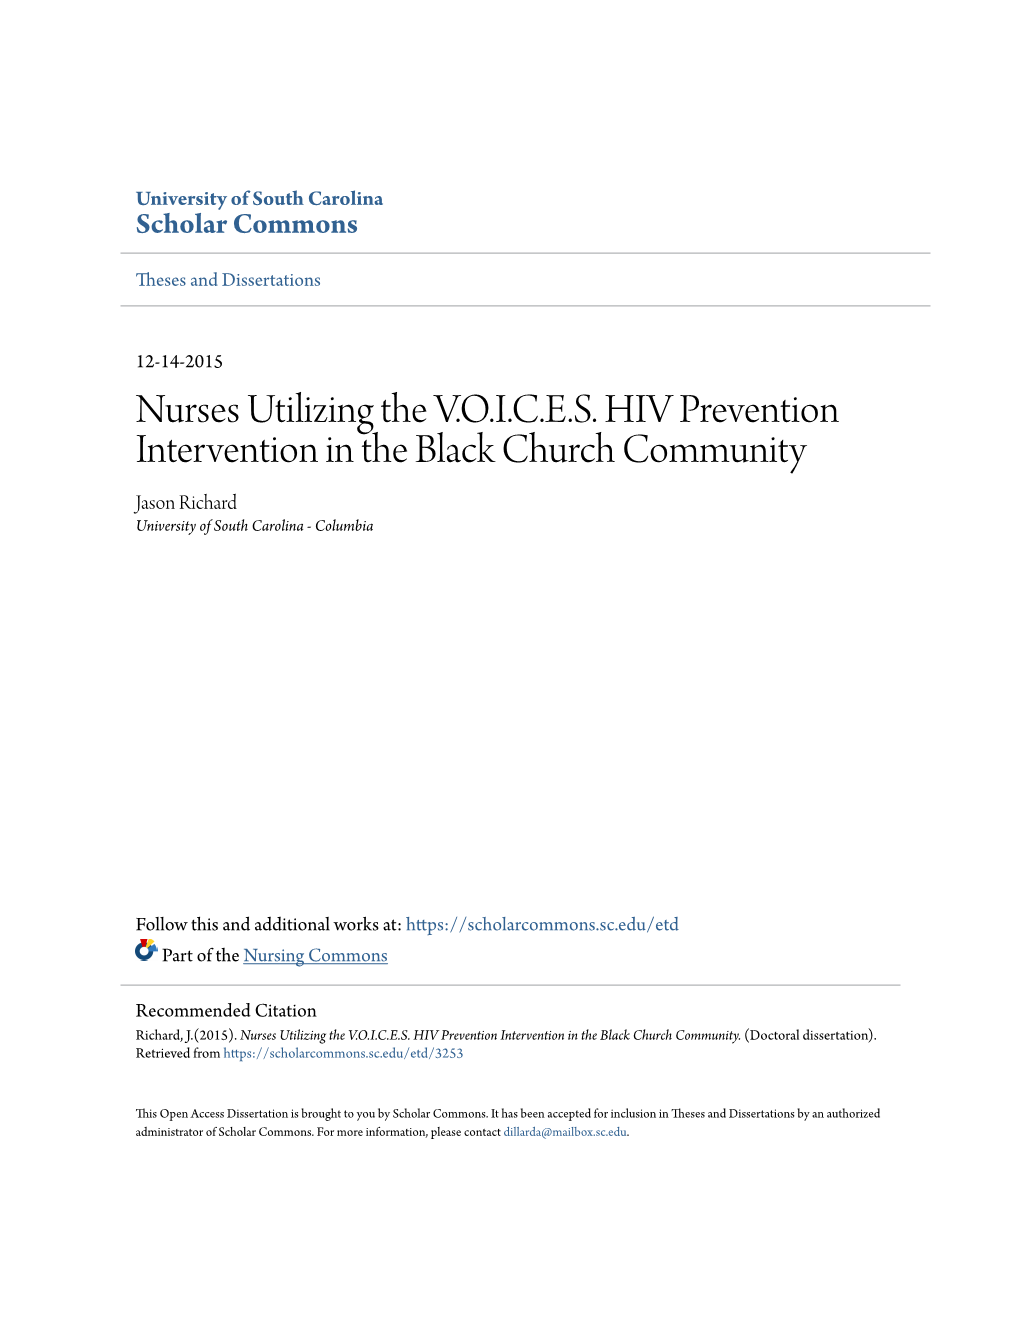 Nurses Utilizing the V.O.I.C.E.S. HIV Prevention Intervention in the Black Church Community Jason Richard University of South Carolina - Columbia